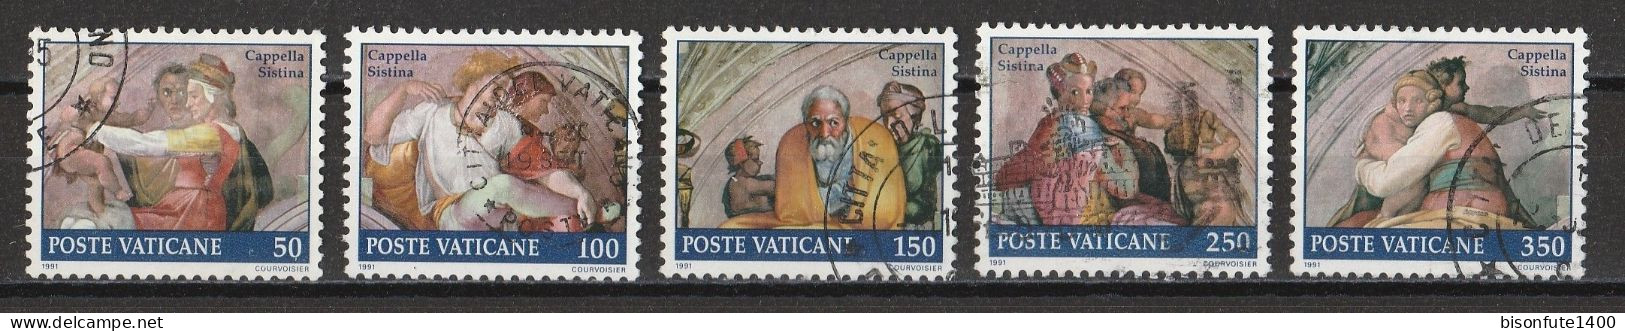 Vatican 1991 : Timbres Yvert & Tellier N° 891 - 892 - 893 - 894 - 895 - 897 - 898 - 899 - 900 Et 901 Oblitérés. - Usados